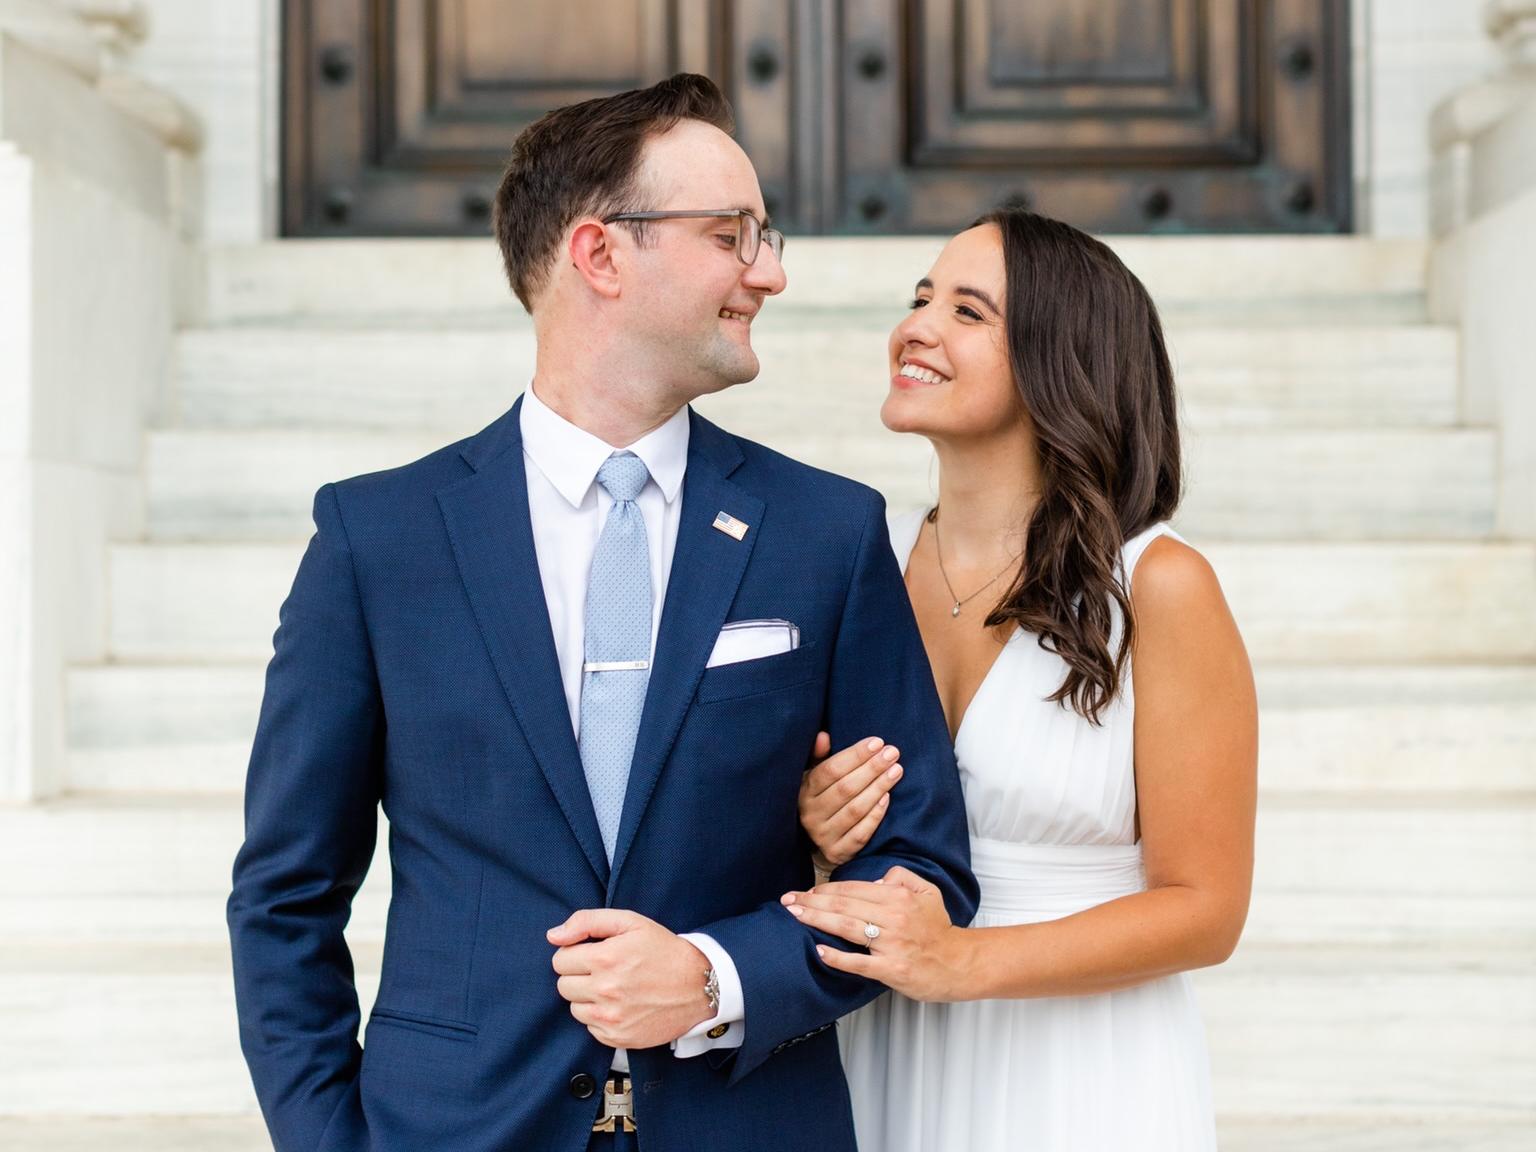 The Wedding Website of Nickole Medel and Ryan Spraker